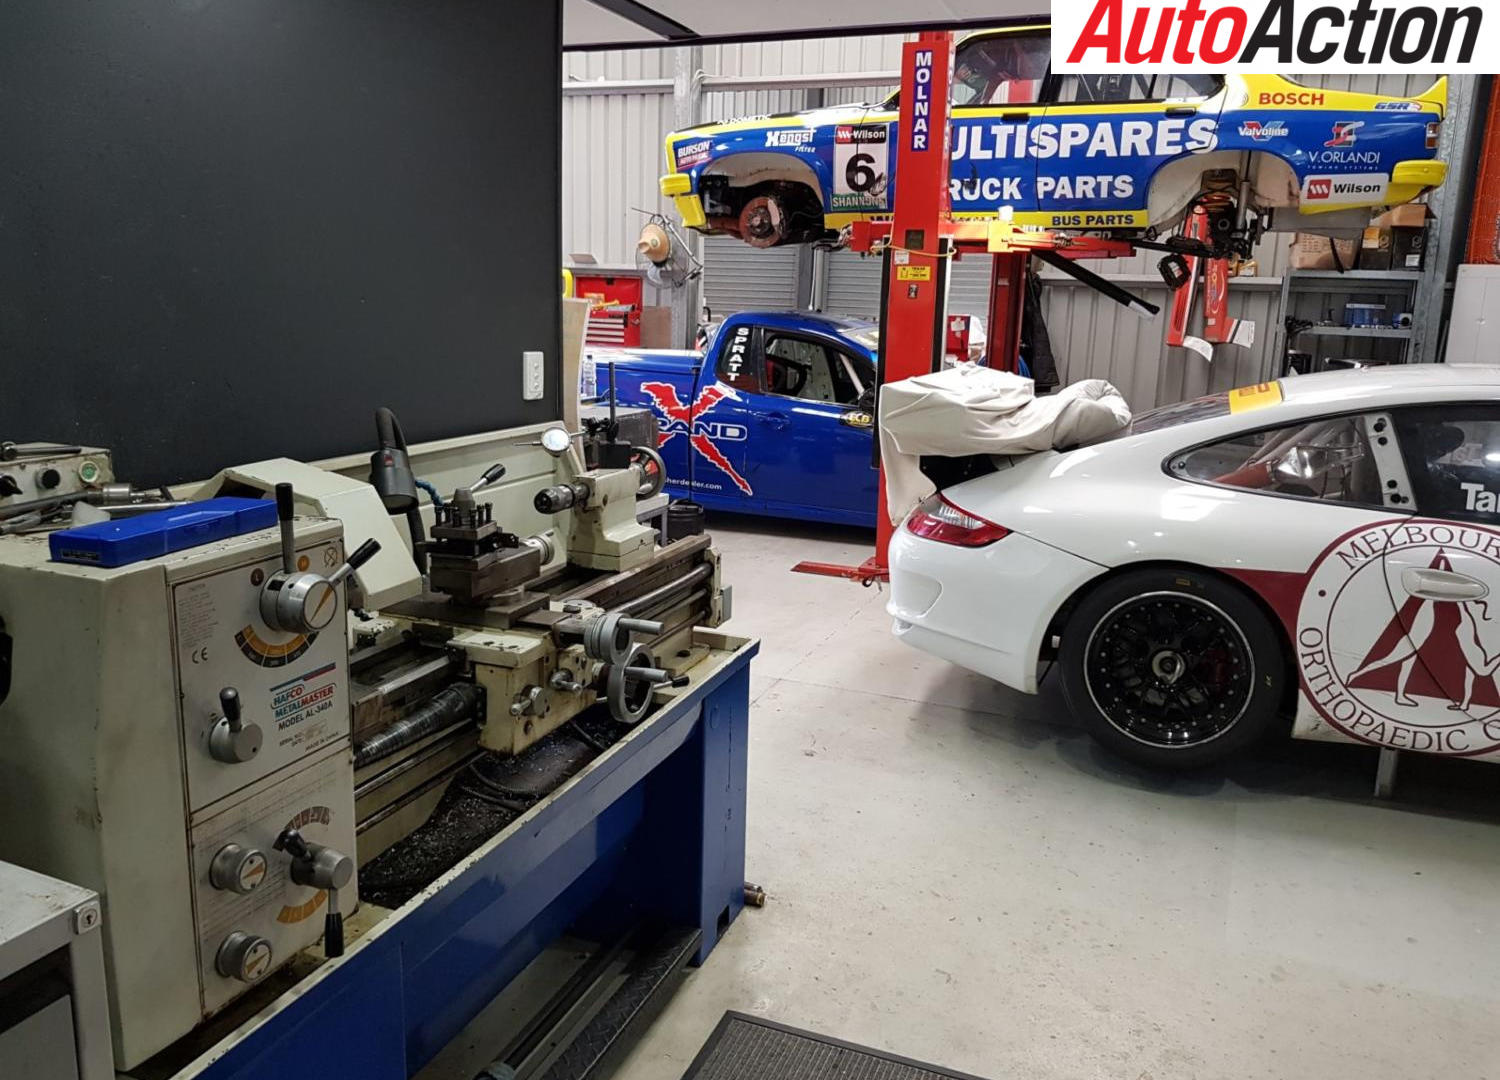 What's in the workshop - Peters Motorsport